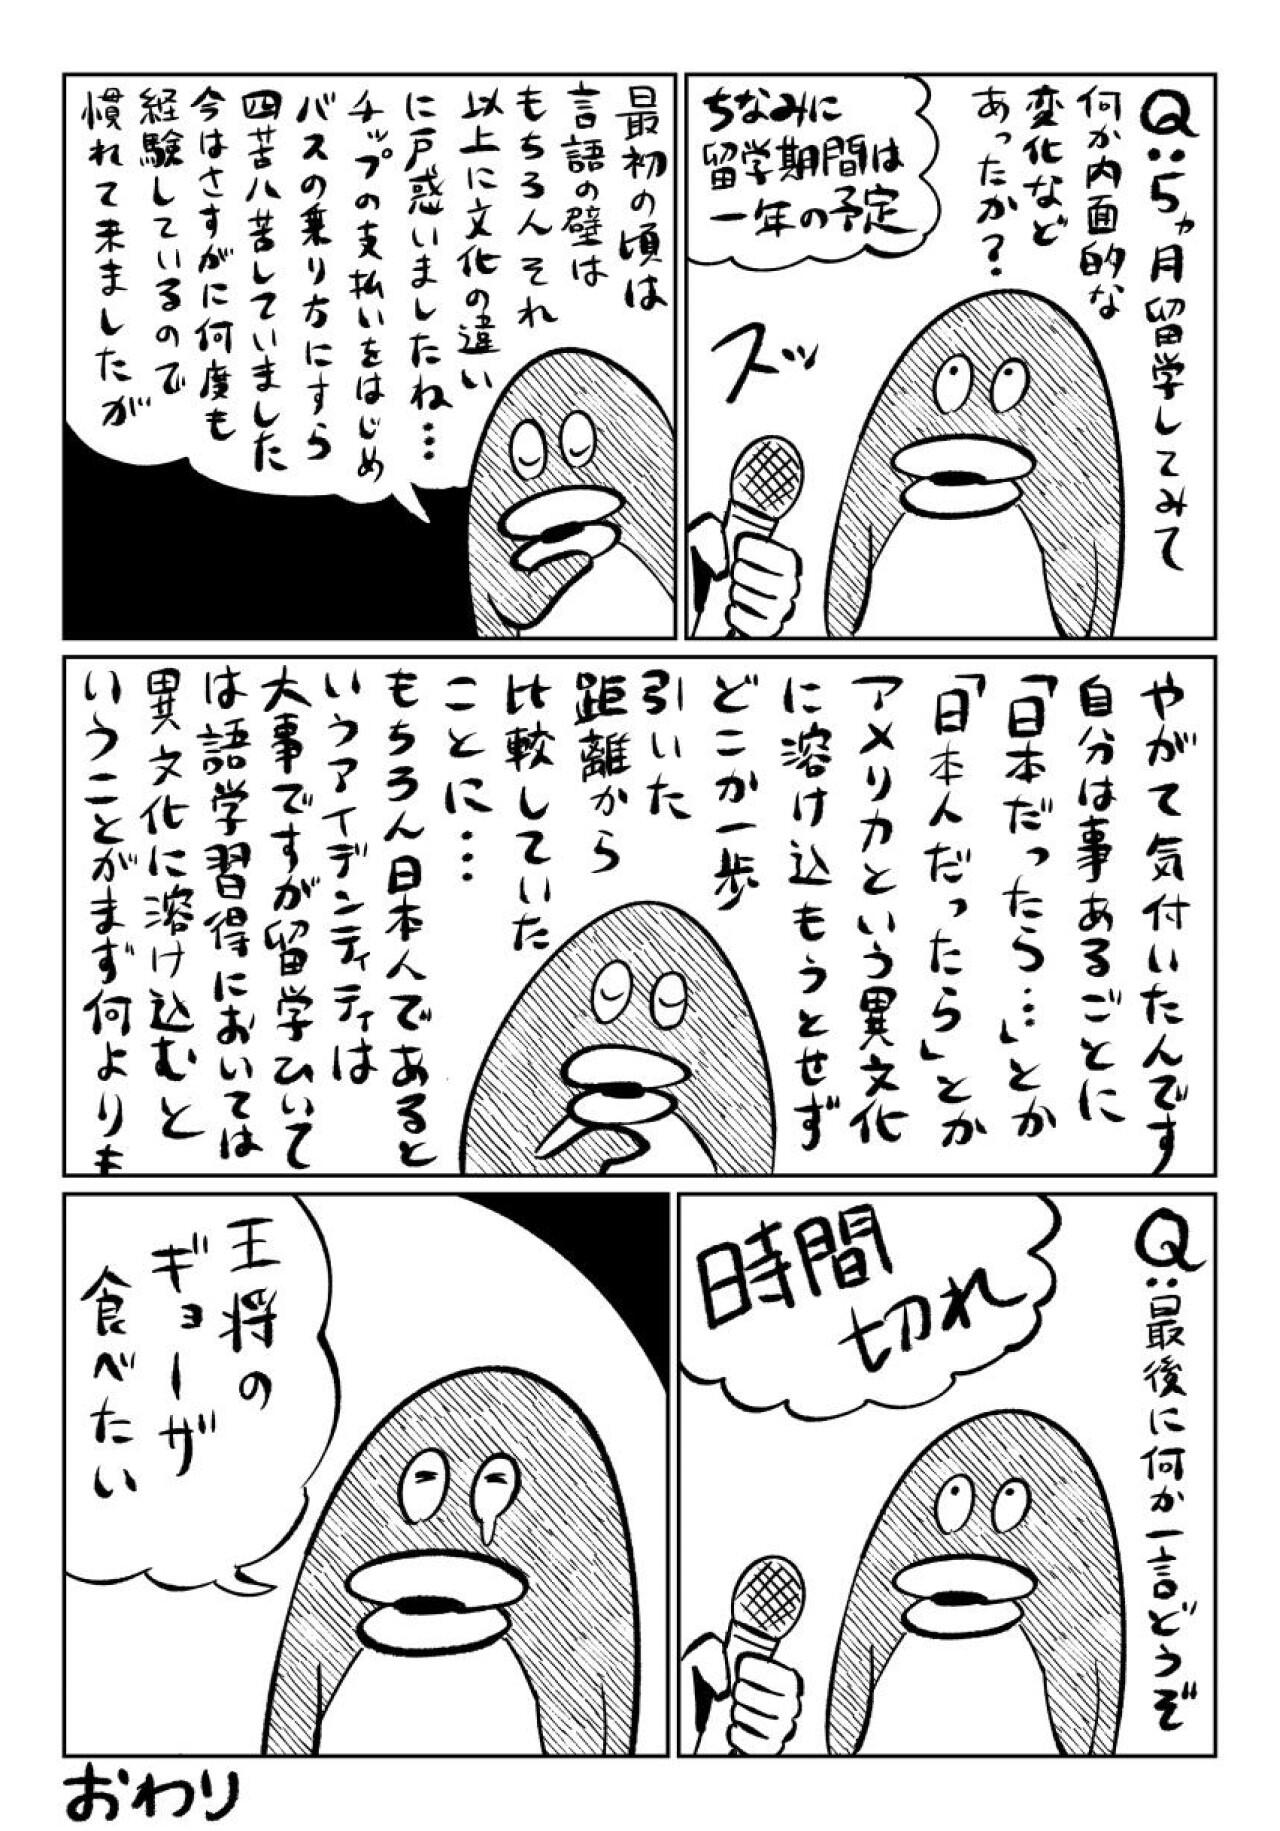 https://www.ryugaku.co.jp/column/images/34saispe_4_1280.jpg